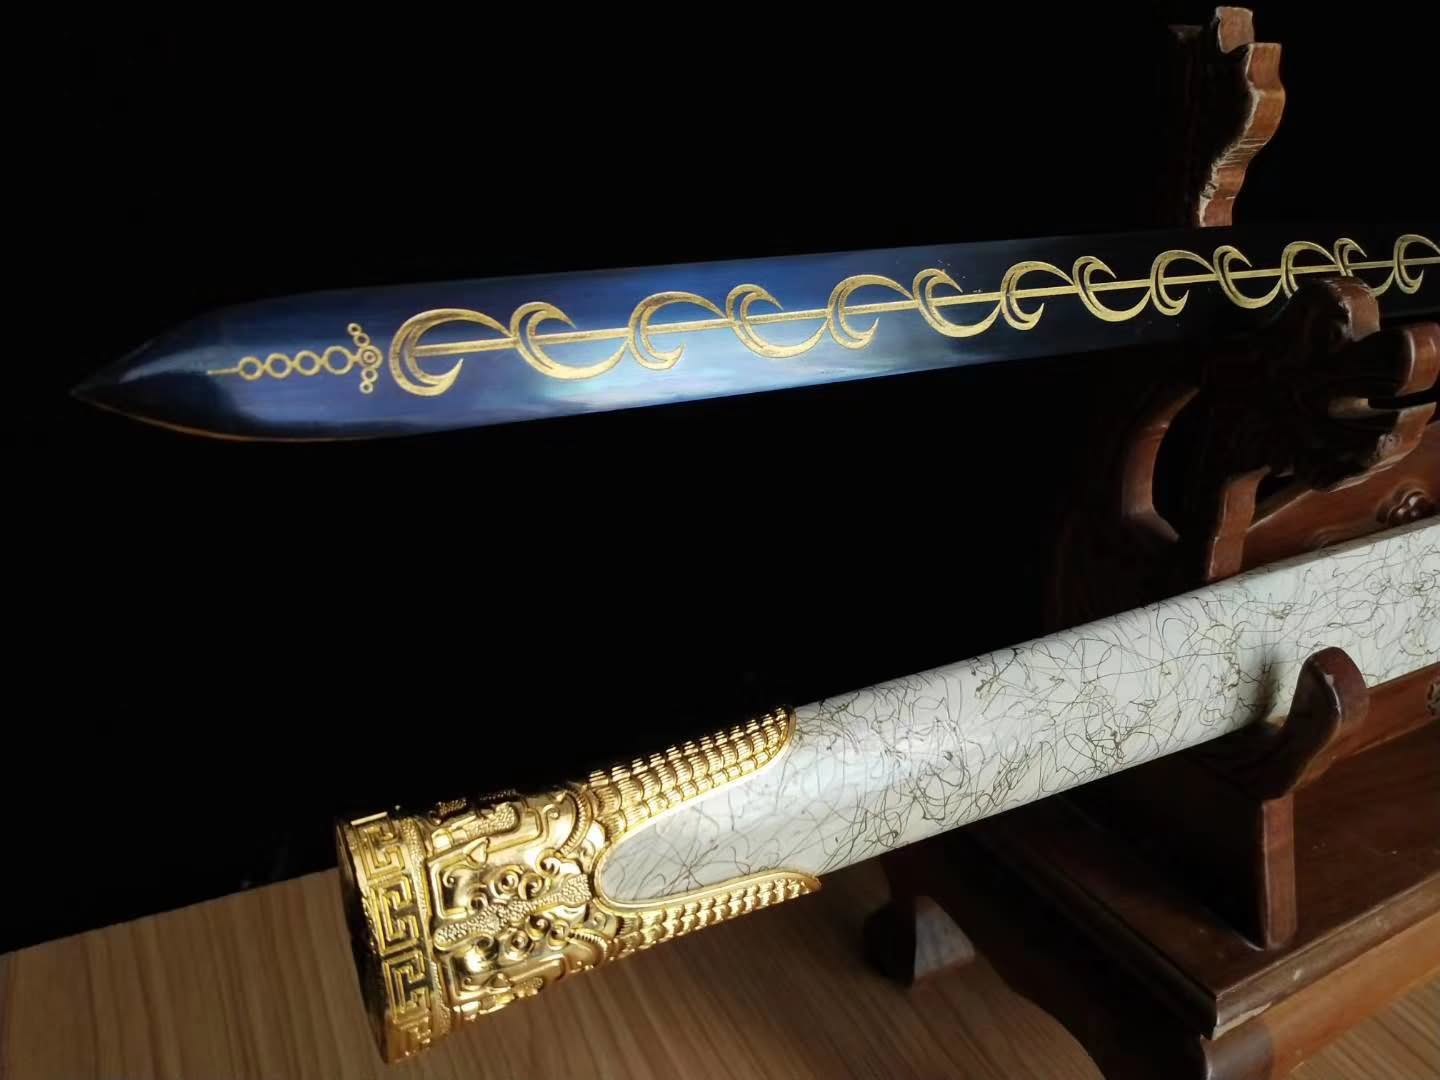 Han jian sword,Medium carbon steel etch blade,Alloy fittings - Chinese sword shop